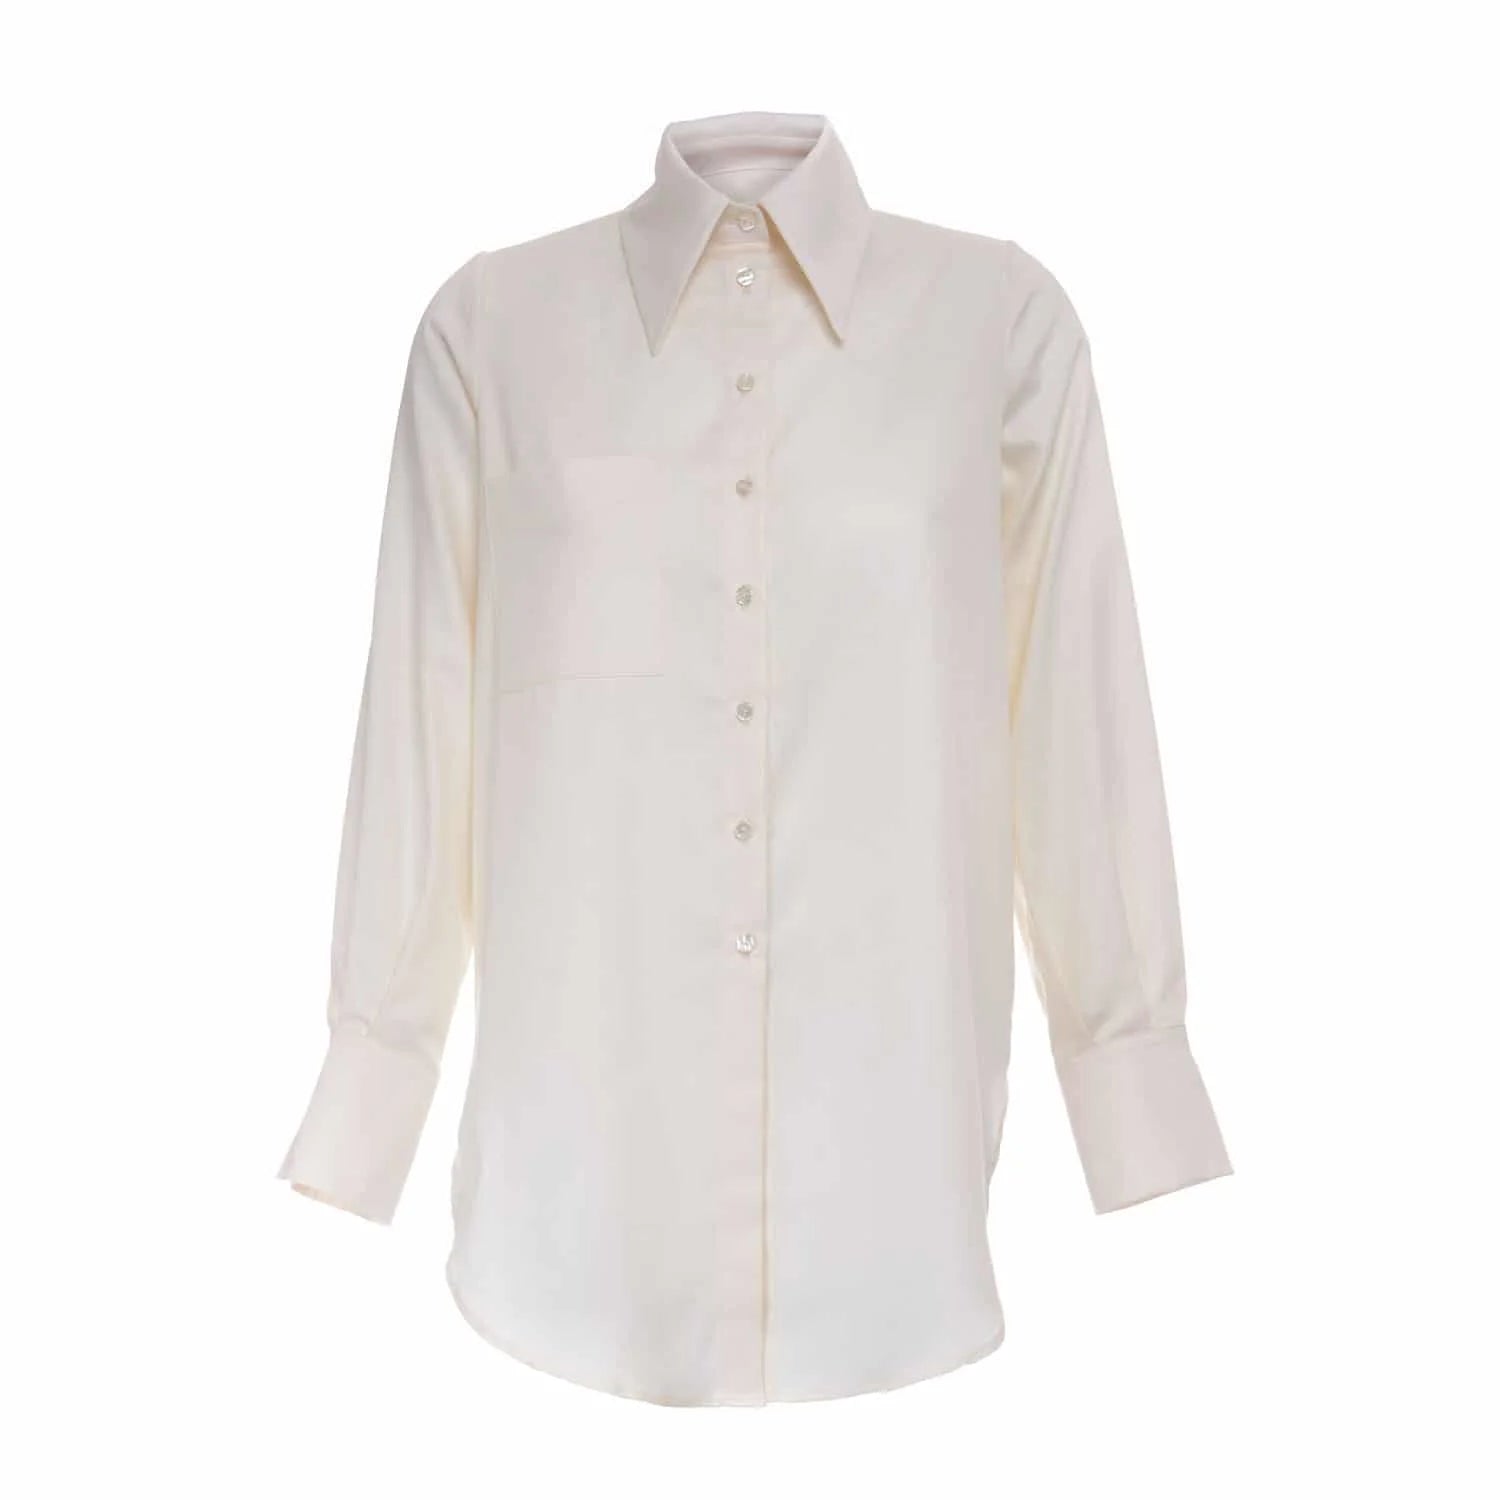 Cotton shirt - Blouse